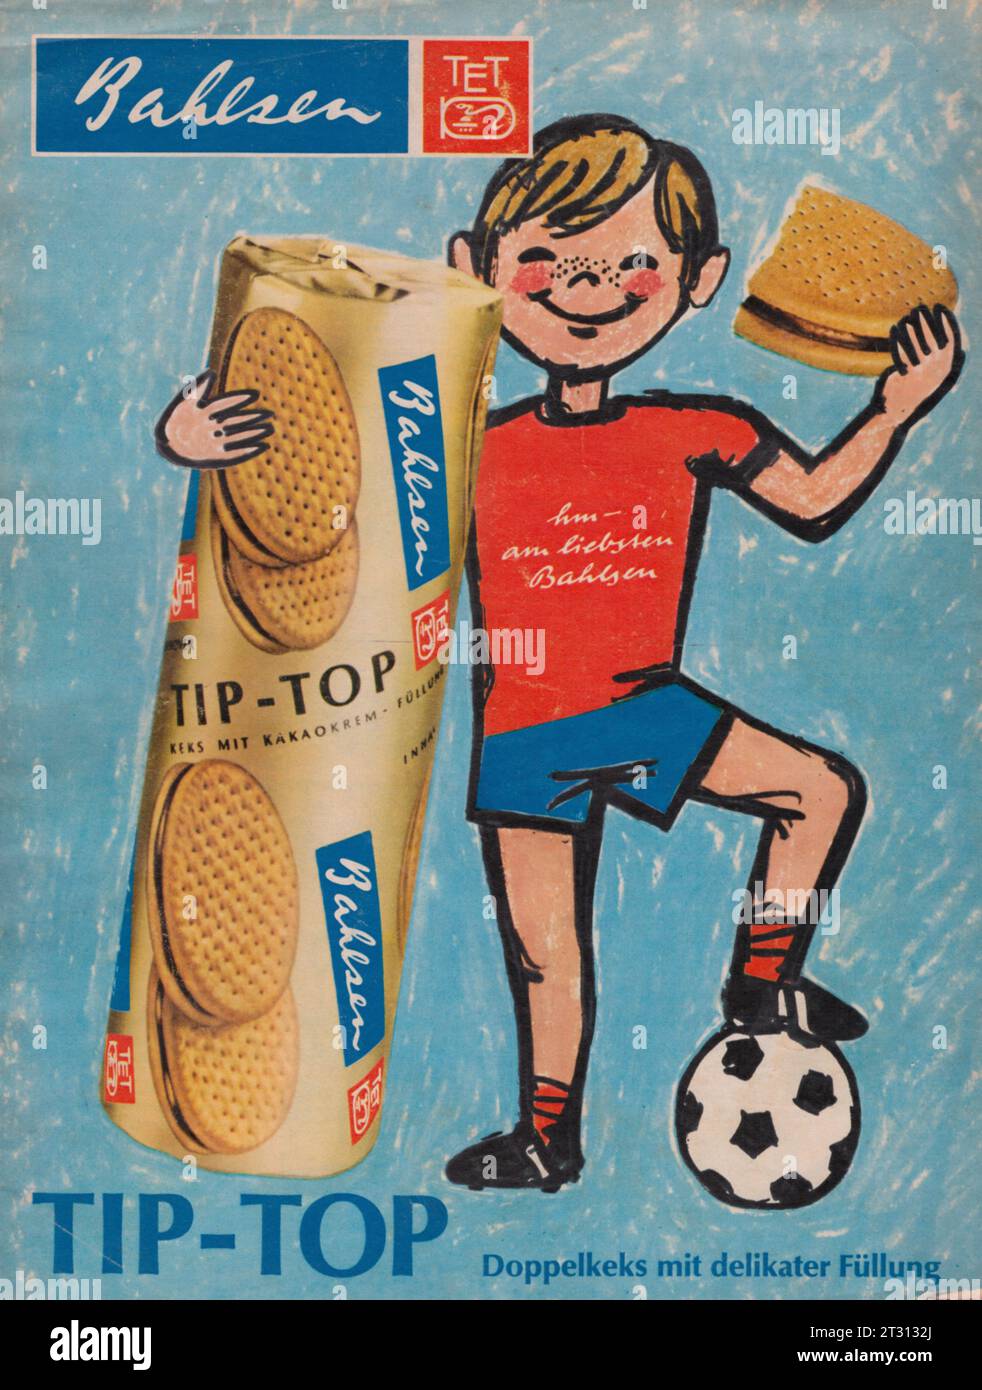 Bahlsen Doppelkeks mit delikater Fullung German vintage commercial Bahlsen Cookies advertisement 1969 Bahlsen biscuits advertising poster Stock Photo